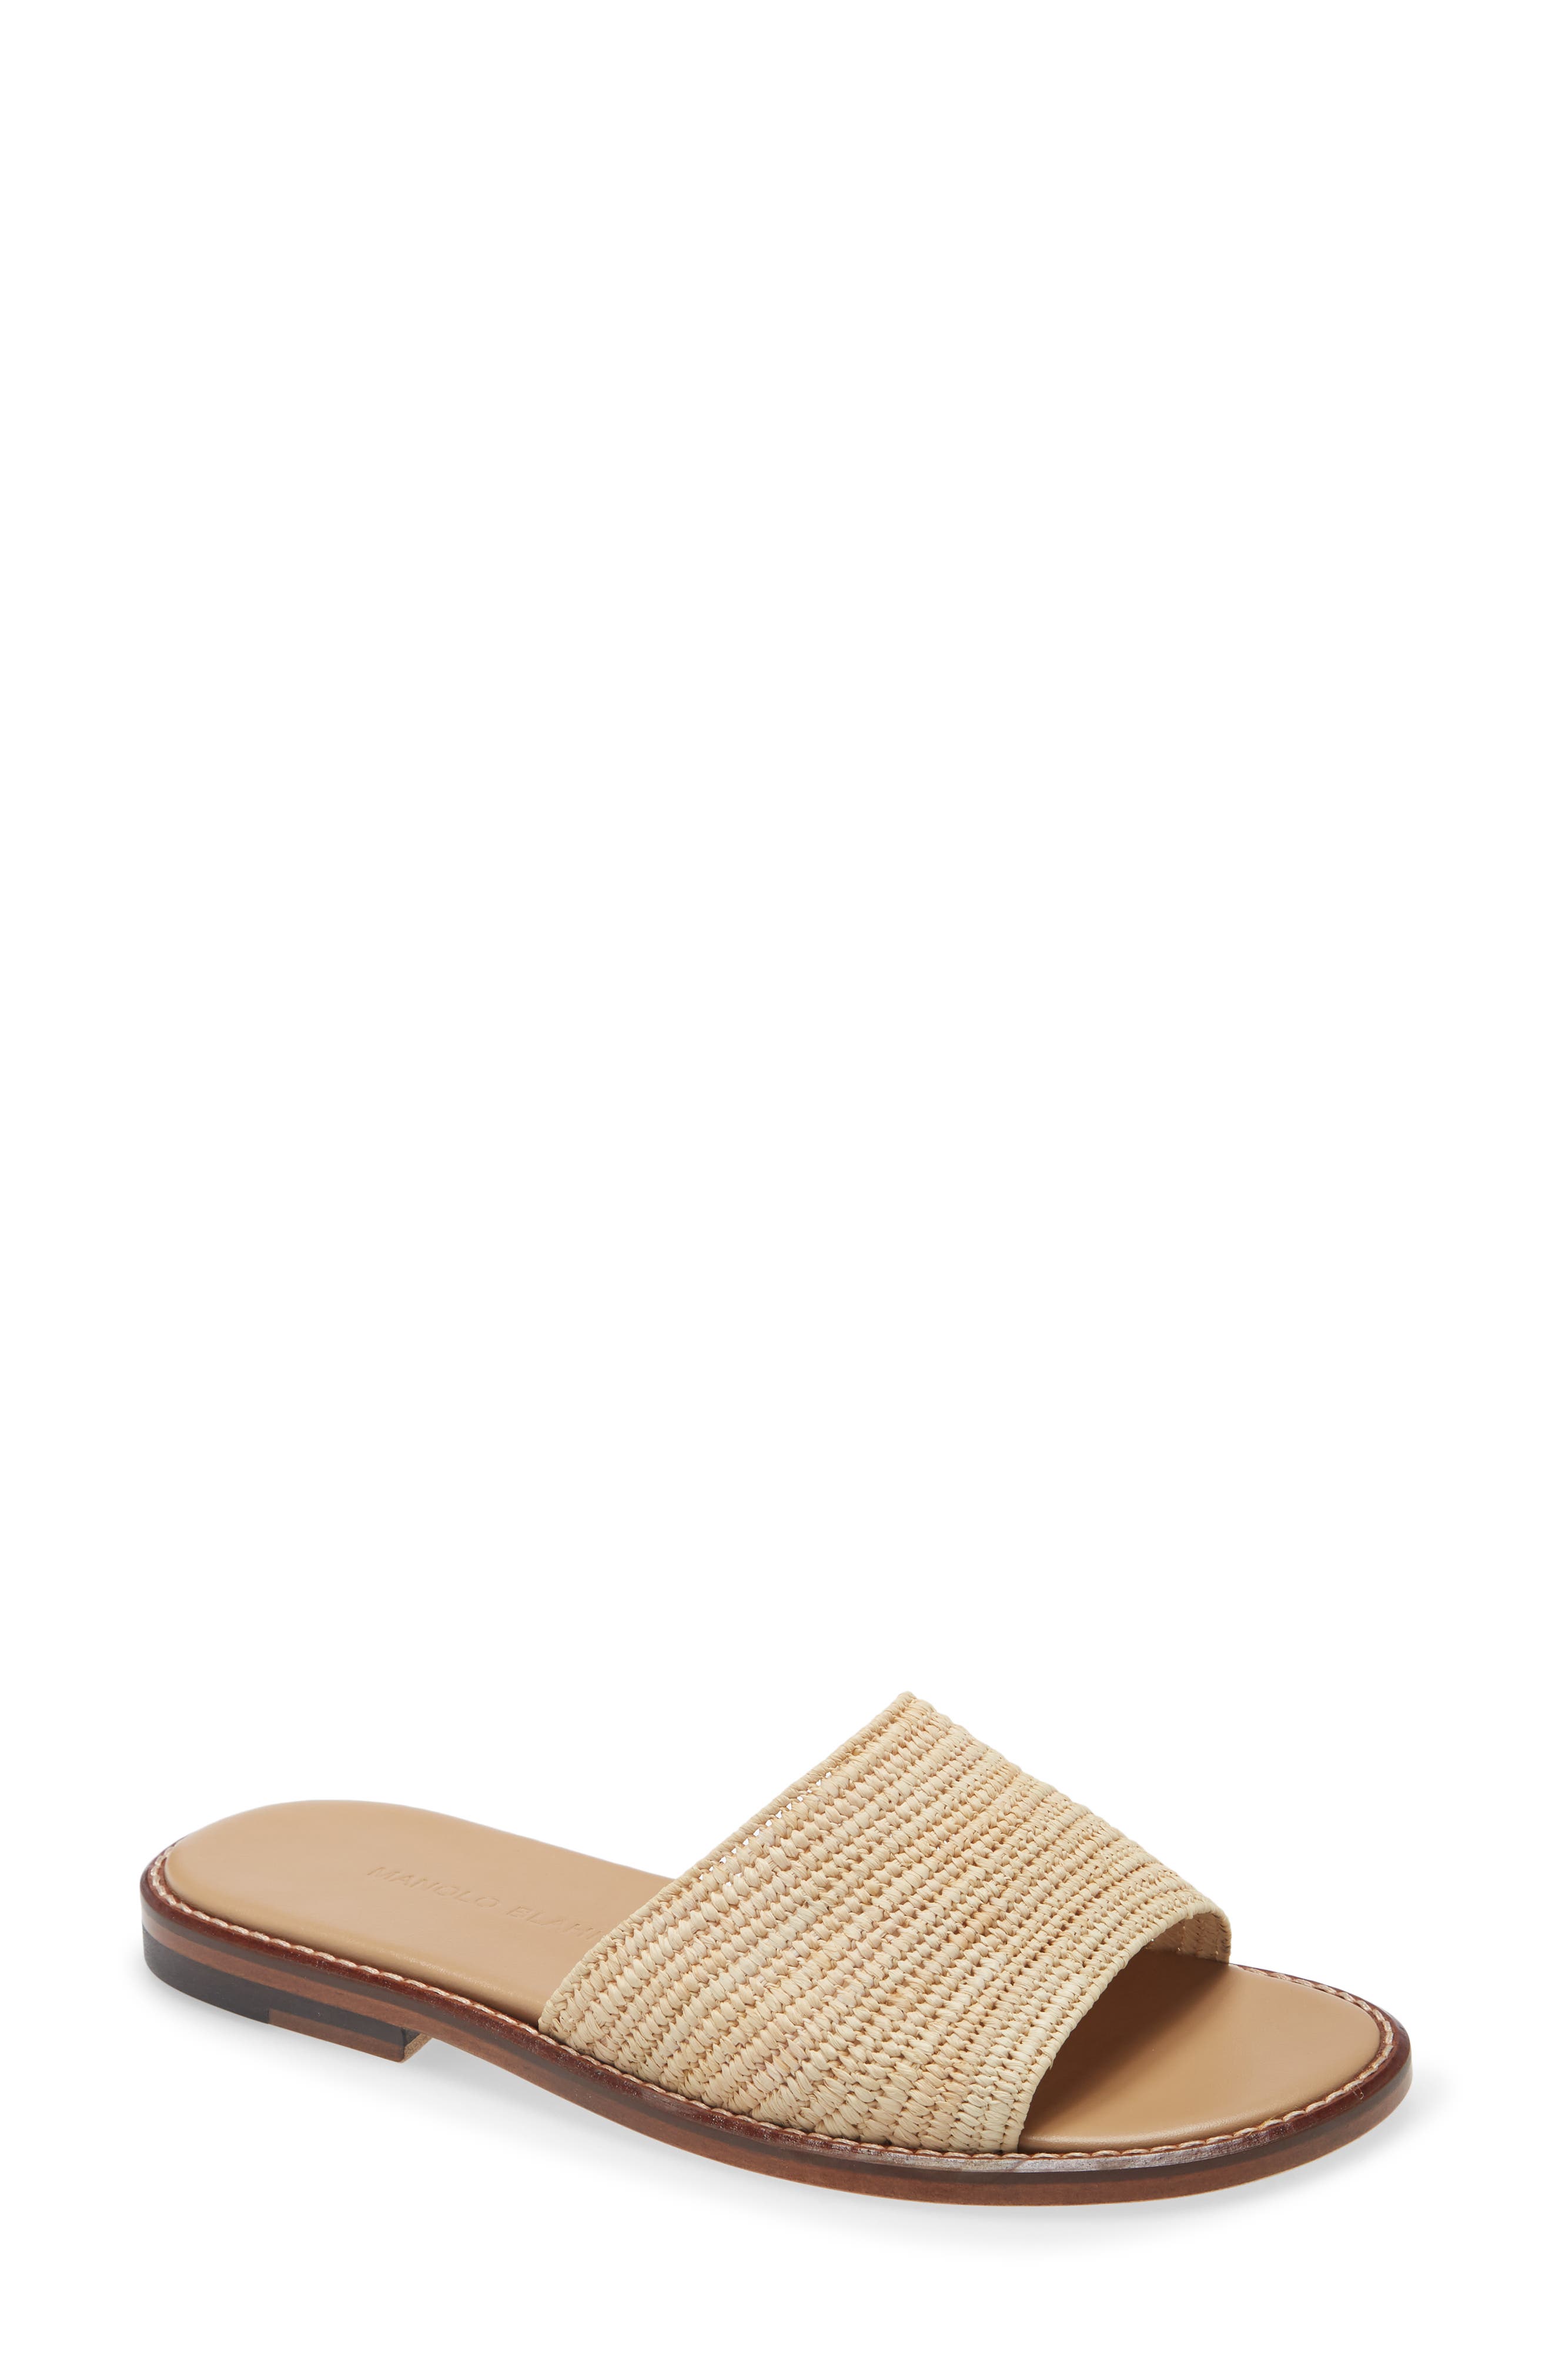 Manolo Blahnik Safina Woven Slide Sandal in Cream at Nordstrom, Size 6Us